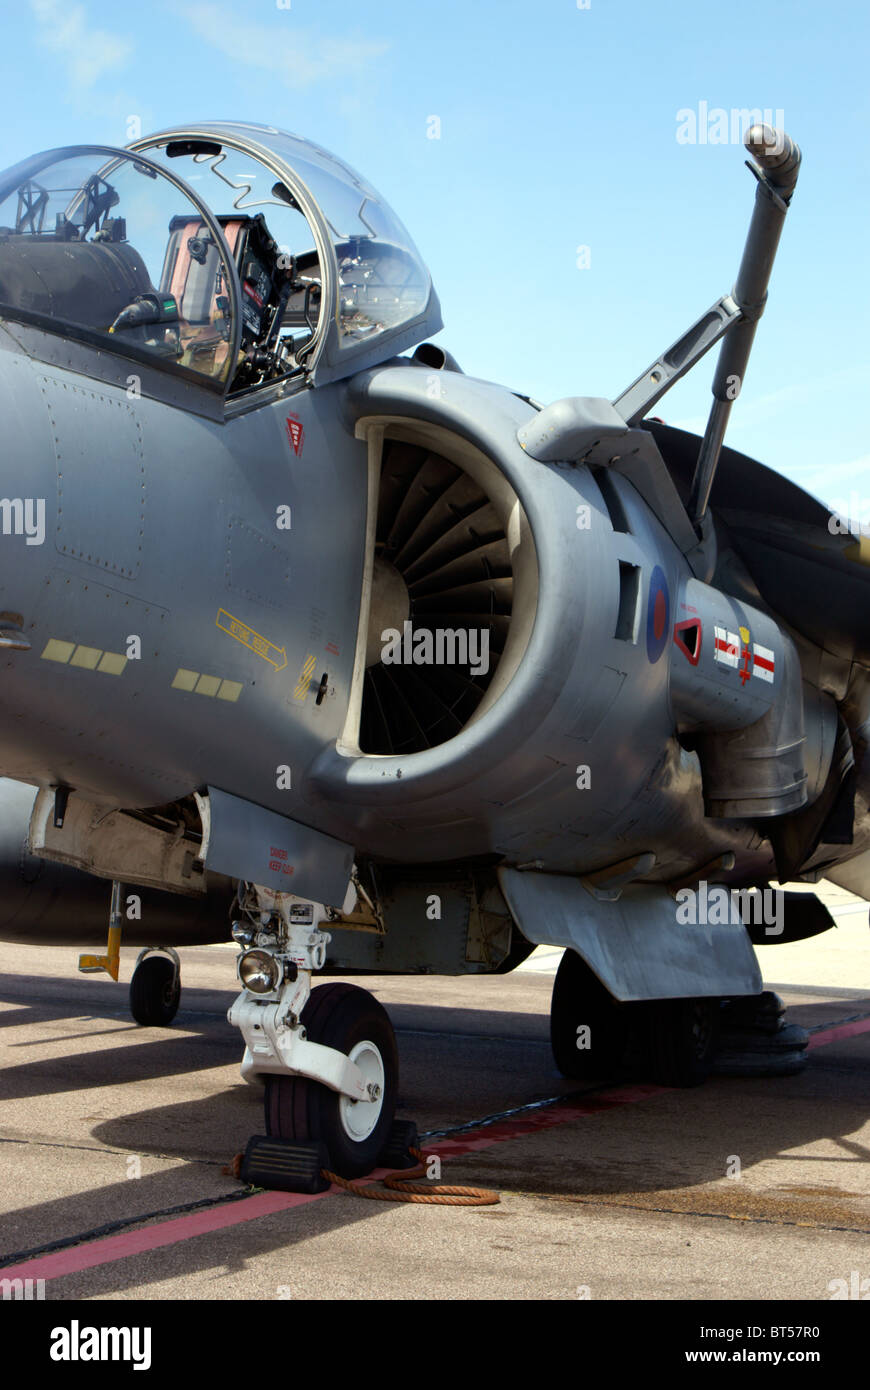 File:BAe Harrier GR7-9 (3735886540).jpg - Wikimedia Commons